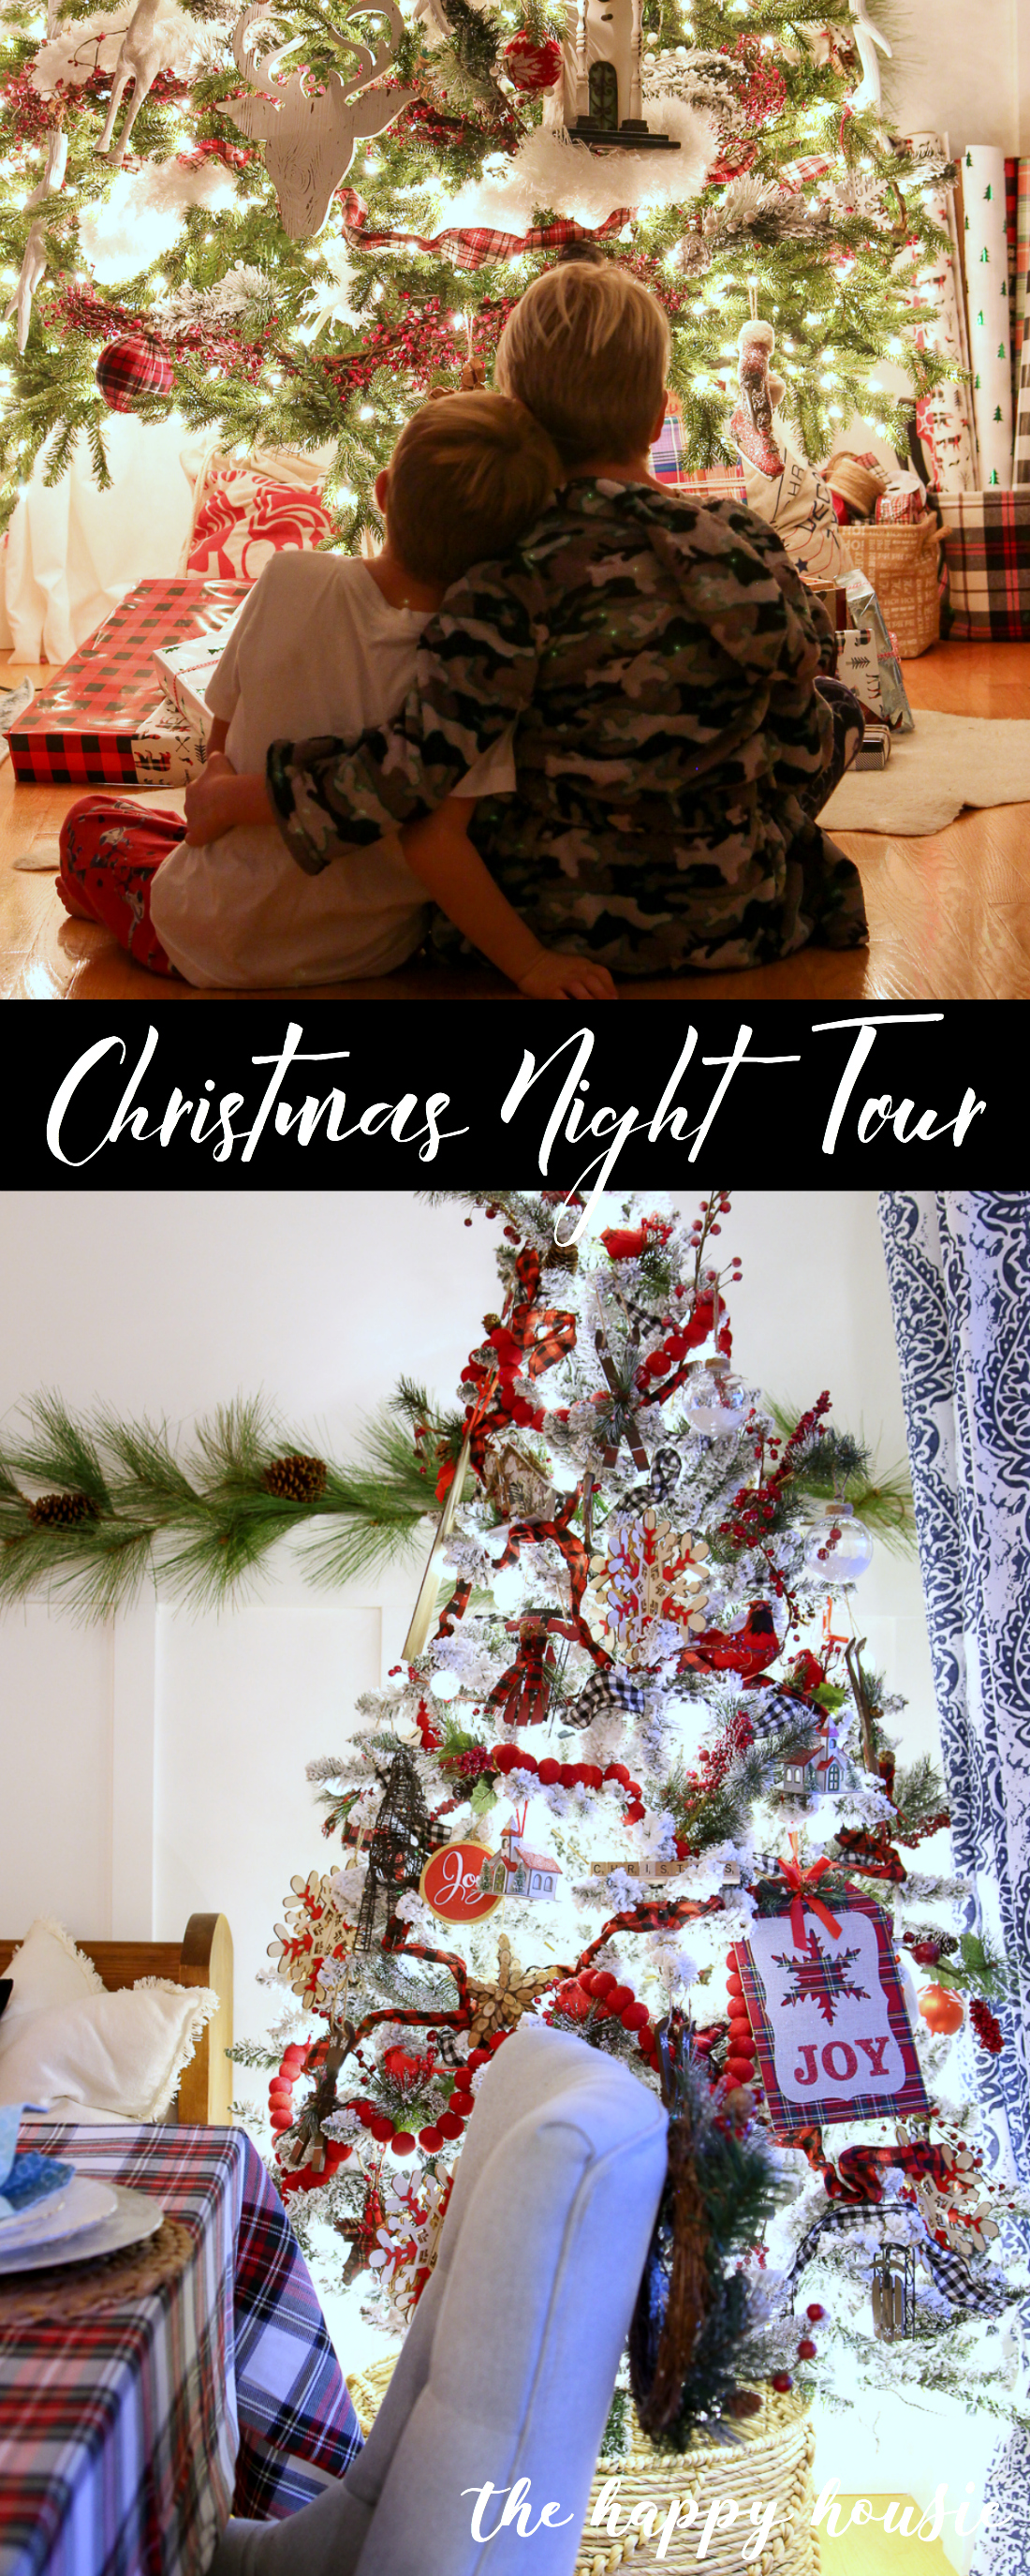 Christmas Night Tour poster.